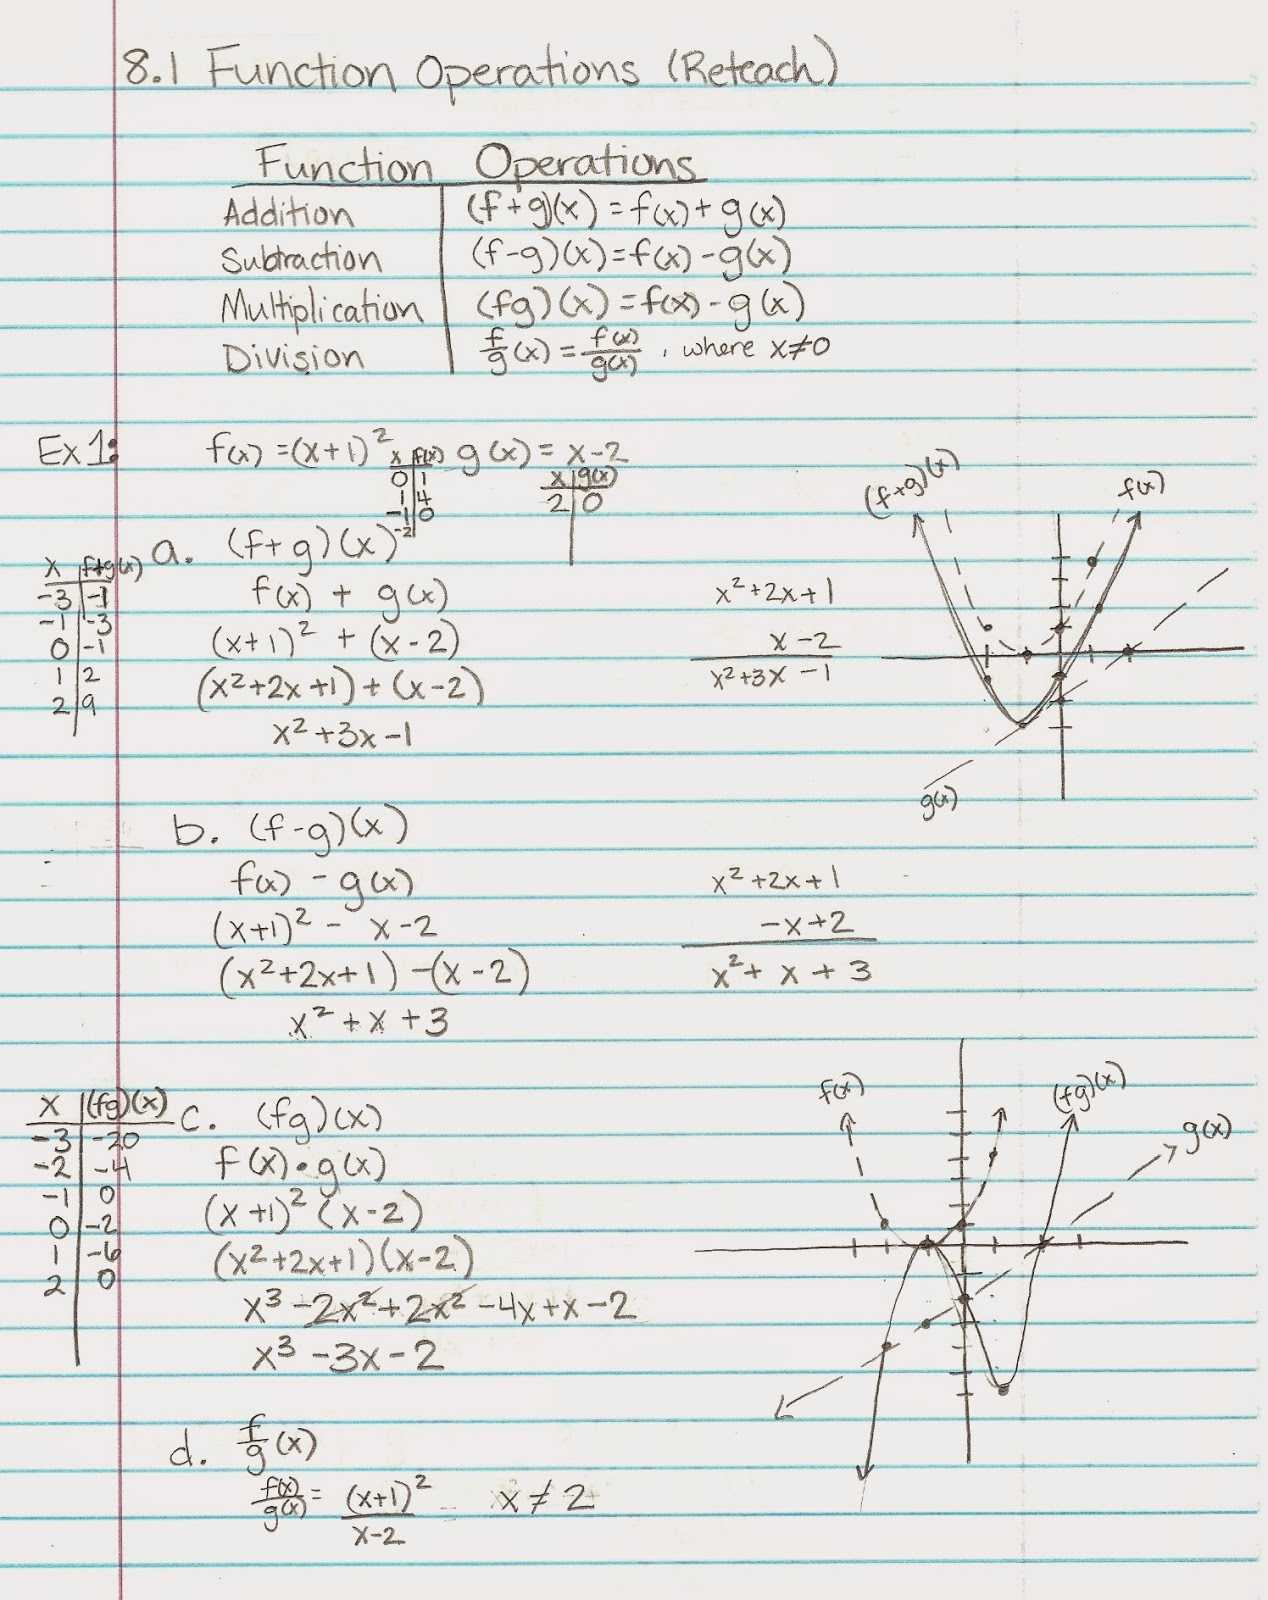 Algebra 2 Factoring Worksheet as Well as Exelent Transformationen Algebra 2 Arbeitsblatt Image Collection